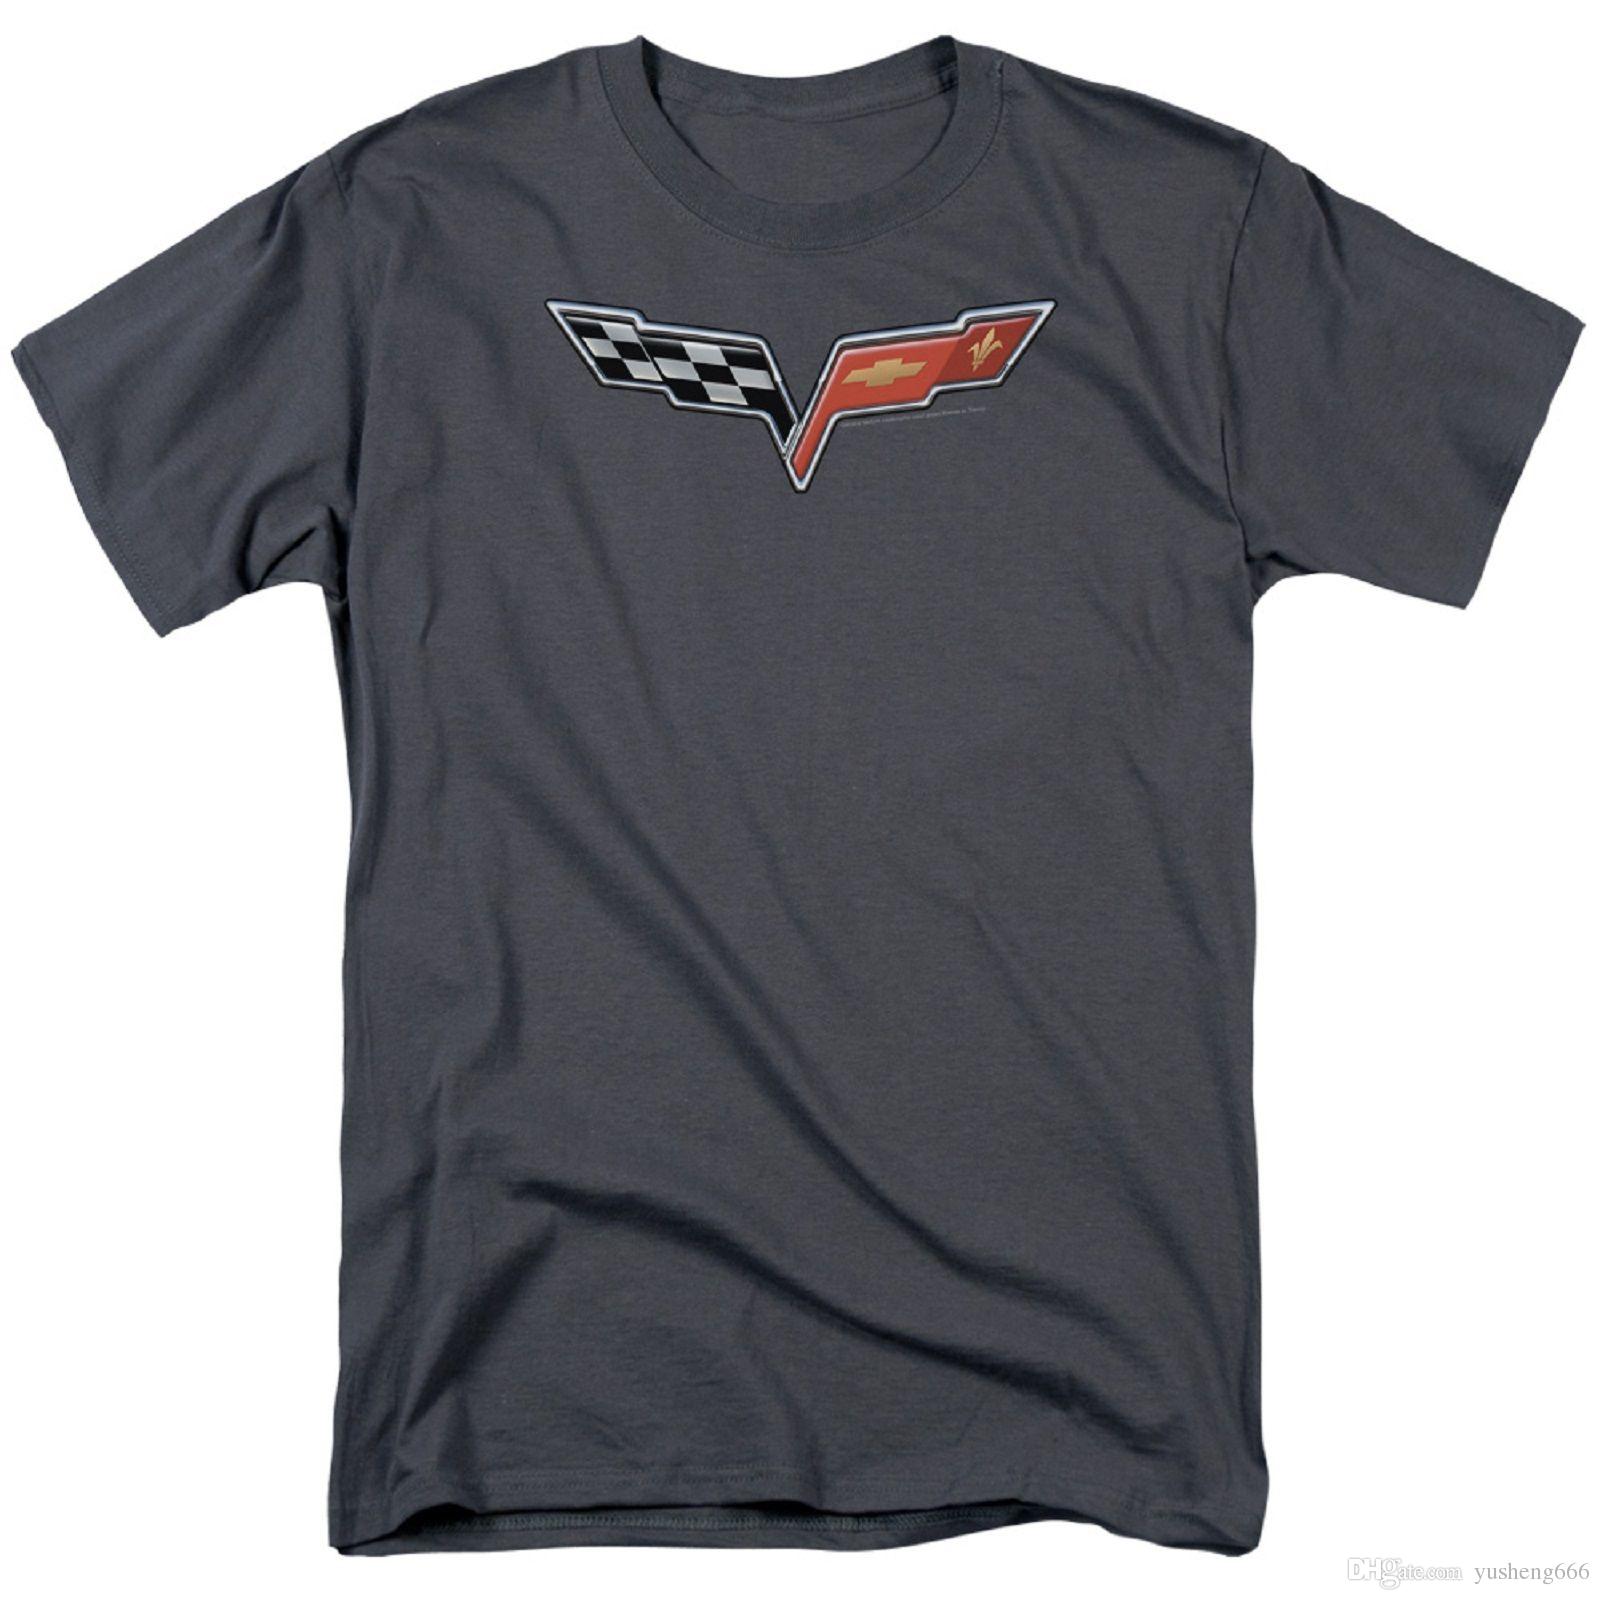 Awesome Corvette Logo - Chevrolet Corvette Flag C6 Logo T Shirt By Trevco Awesome Tee Shirt ...